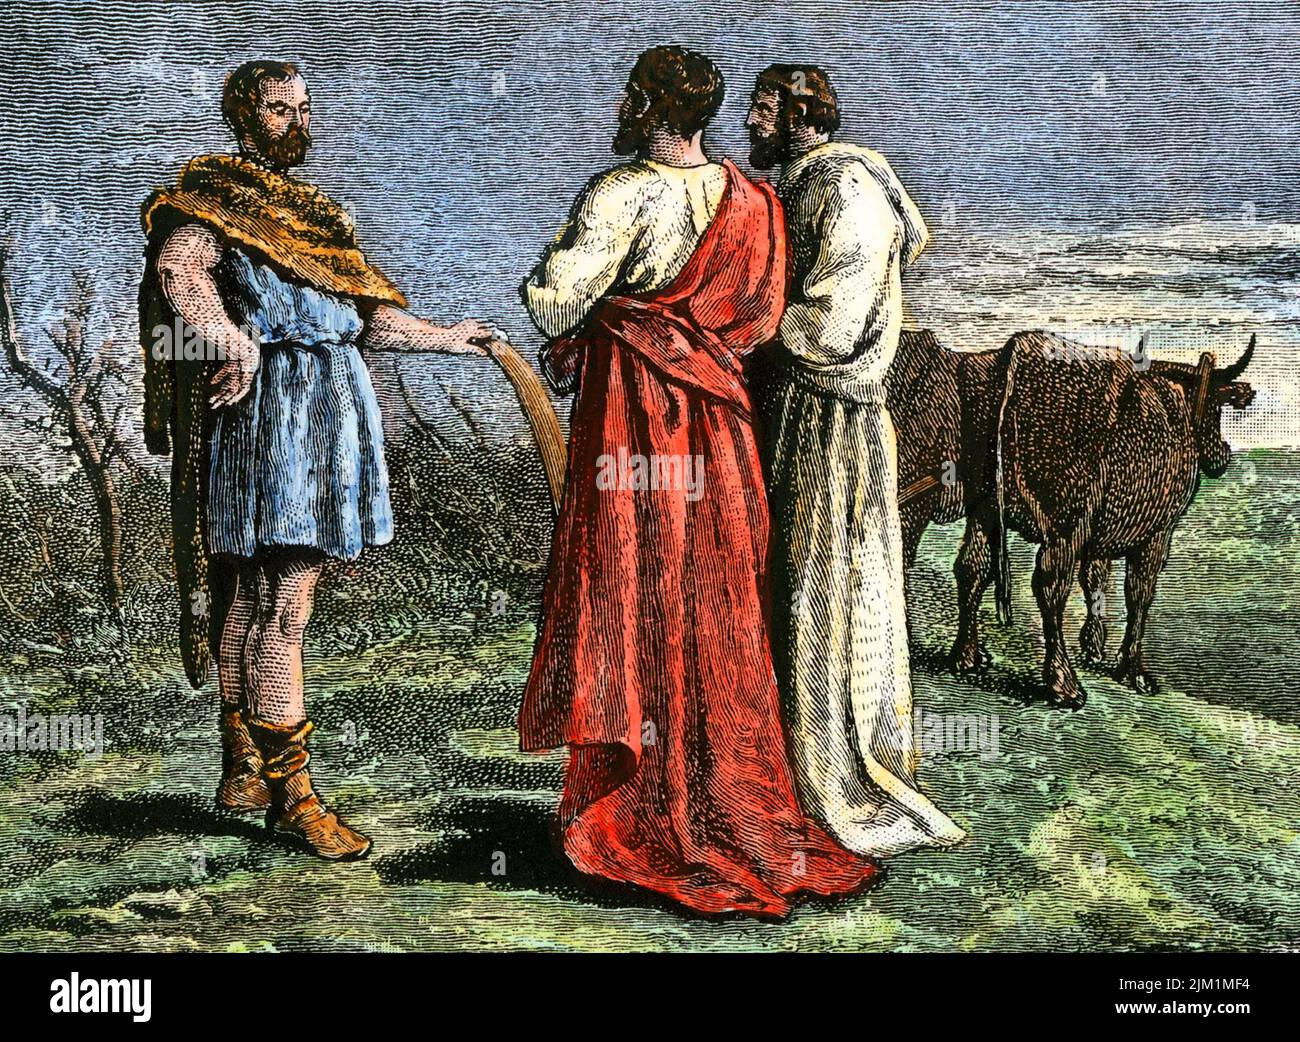 Lucius Quinctius Cincinnatus verlässt den Pflug, um Rom Gesetze zu diktieren. Museum: PRIVATE SAMMLUNG. Autor: ANONYM. Stockfoto